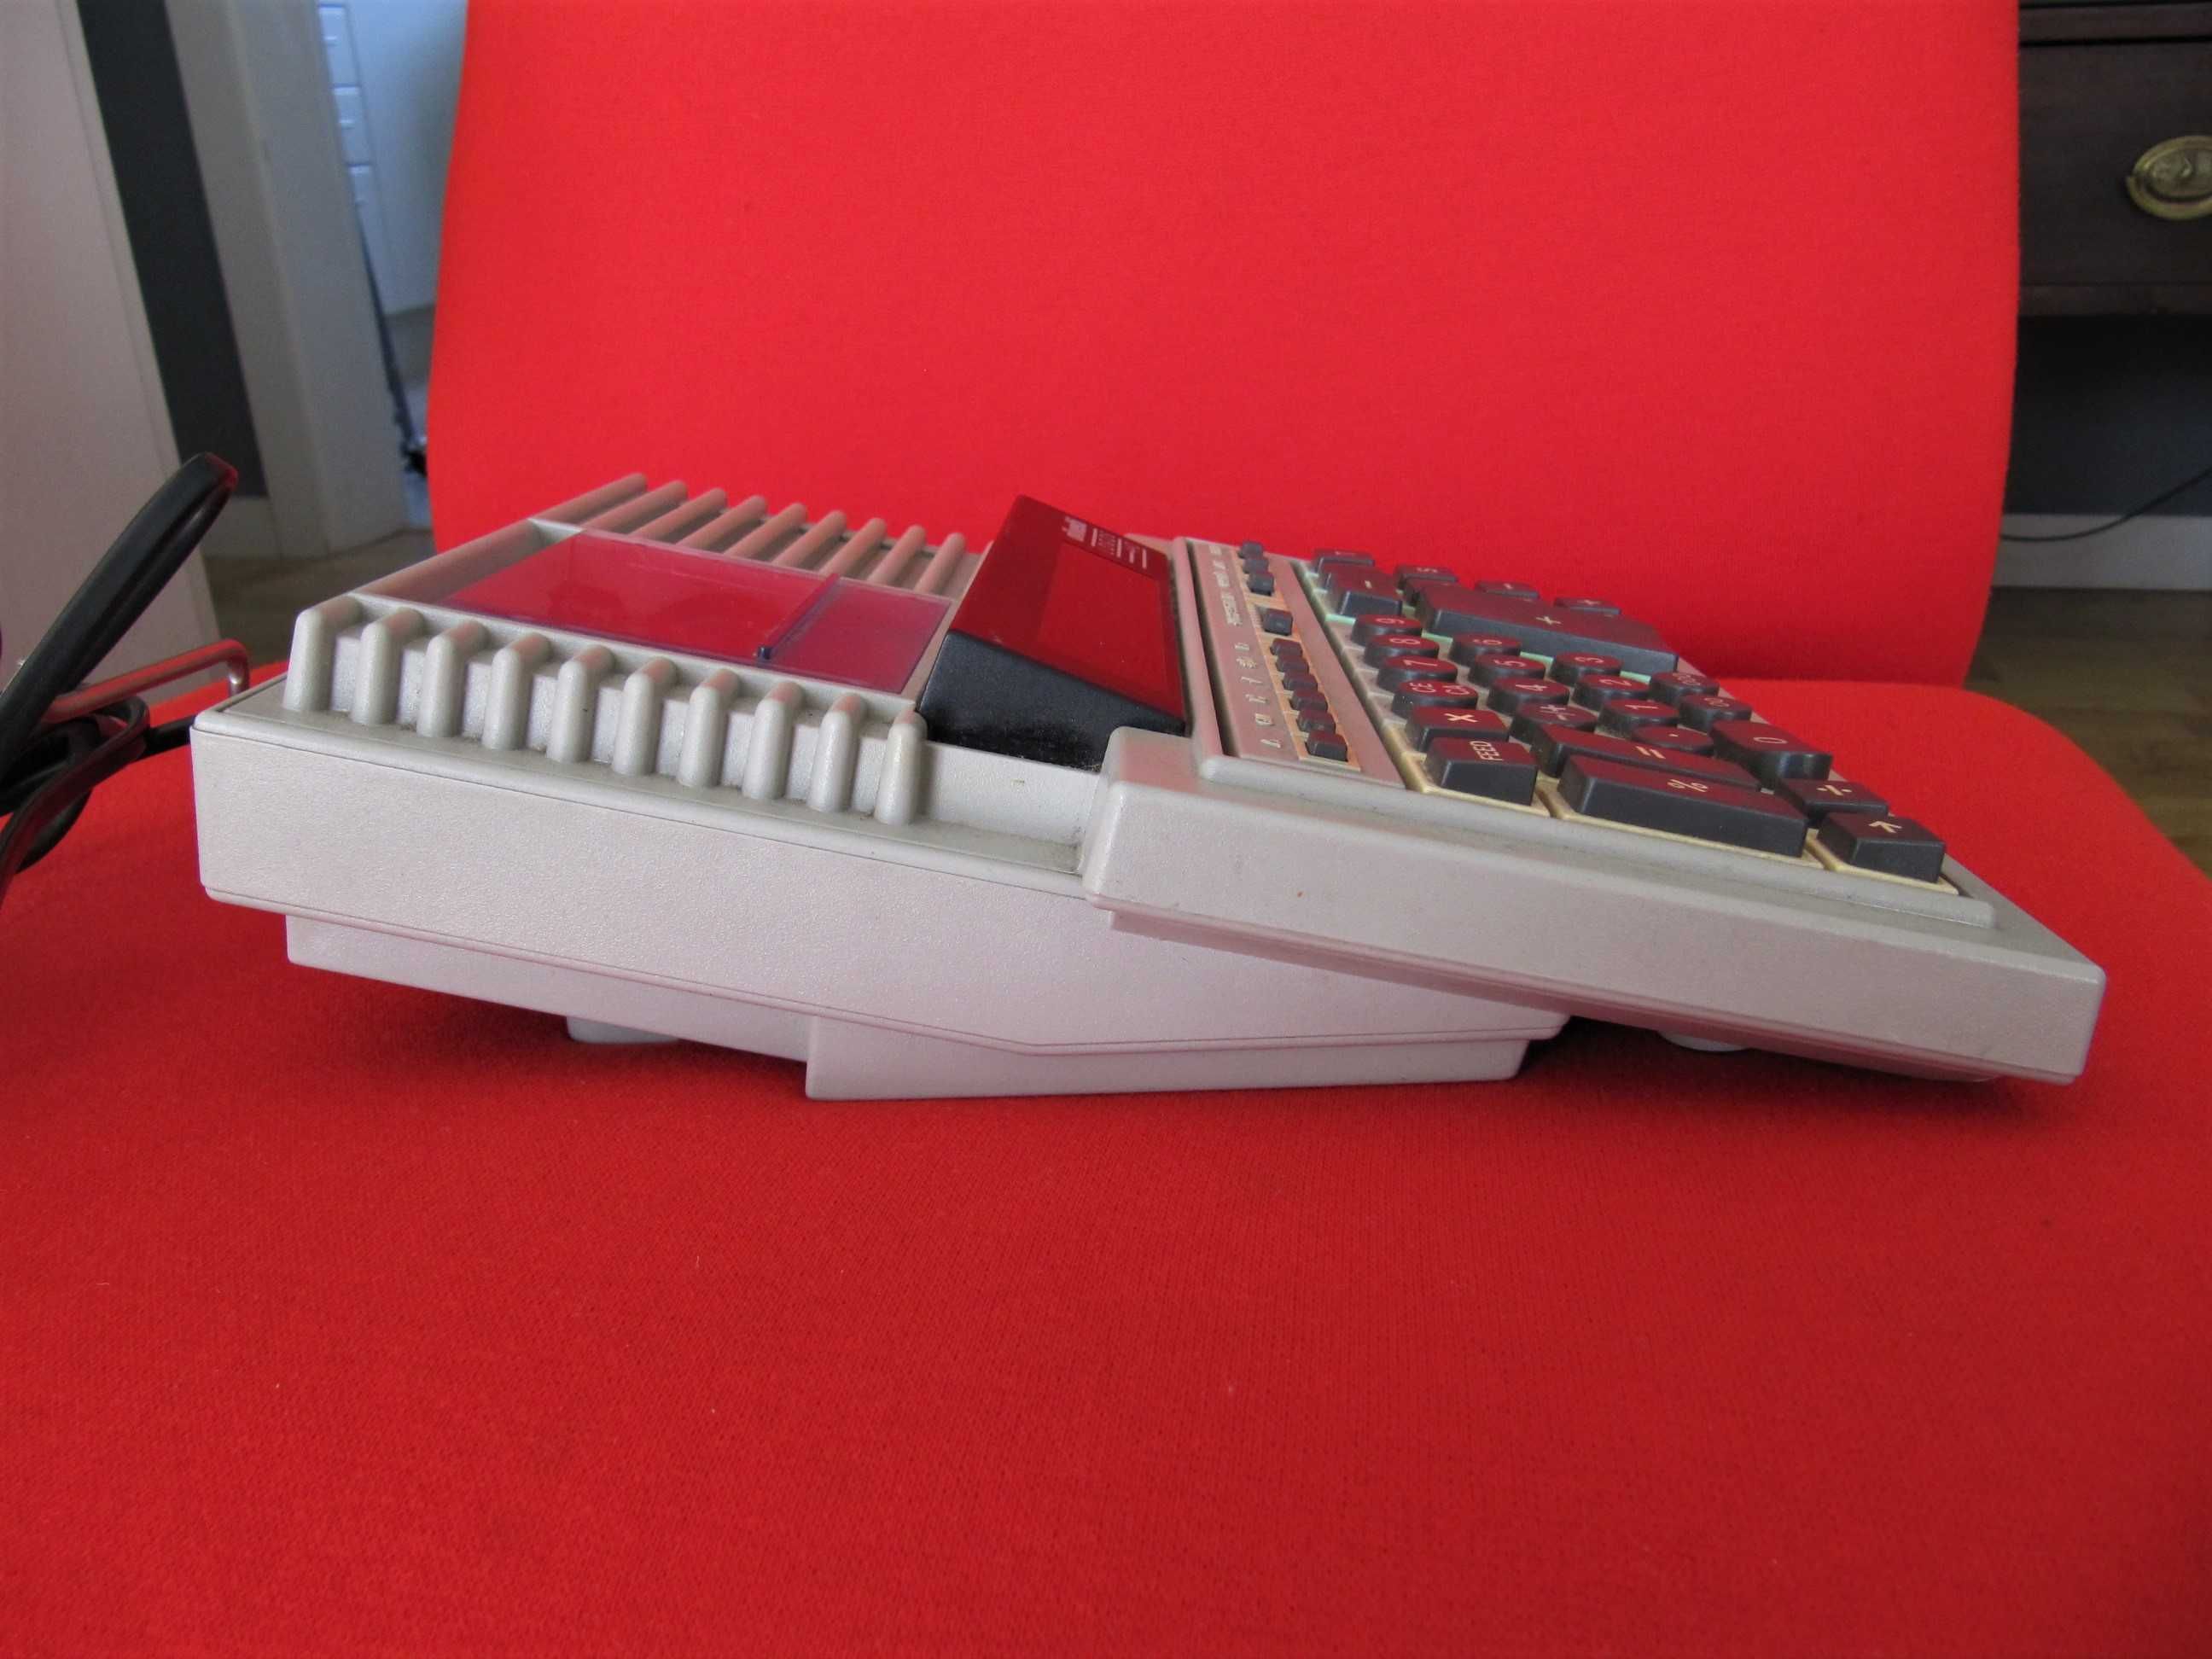 2 calculadoras eletrónicas Olivetti anos 70 design Mario Bellini